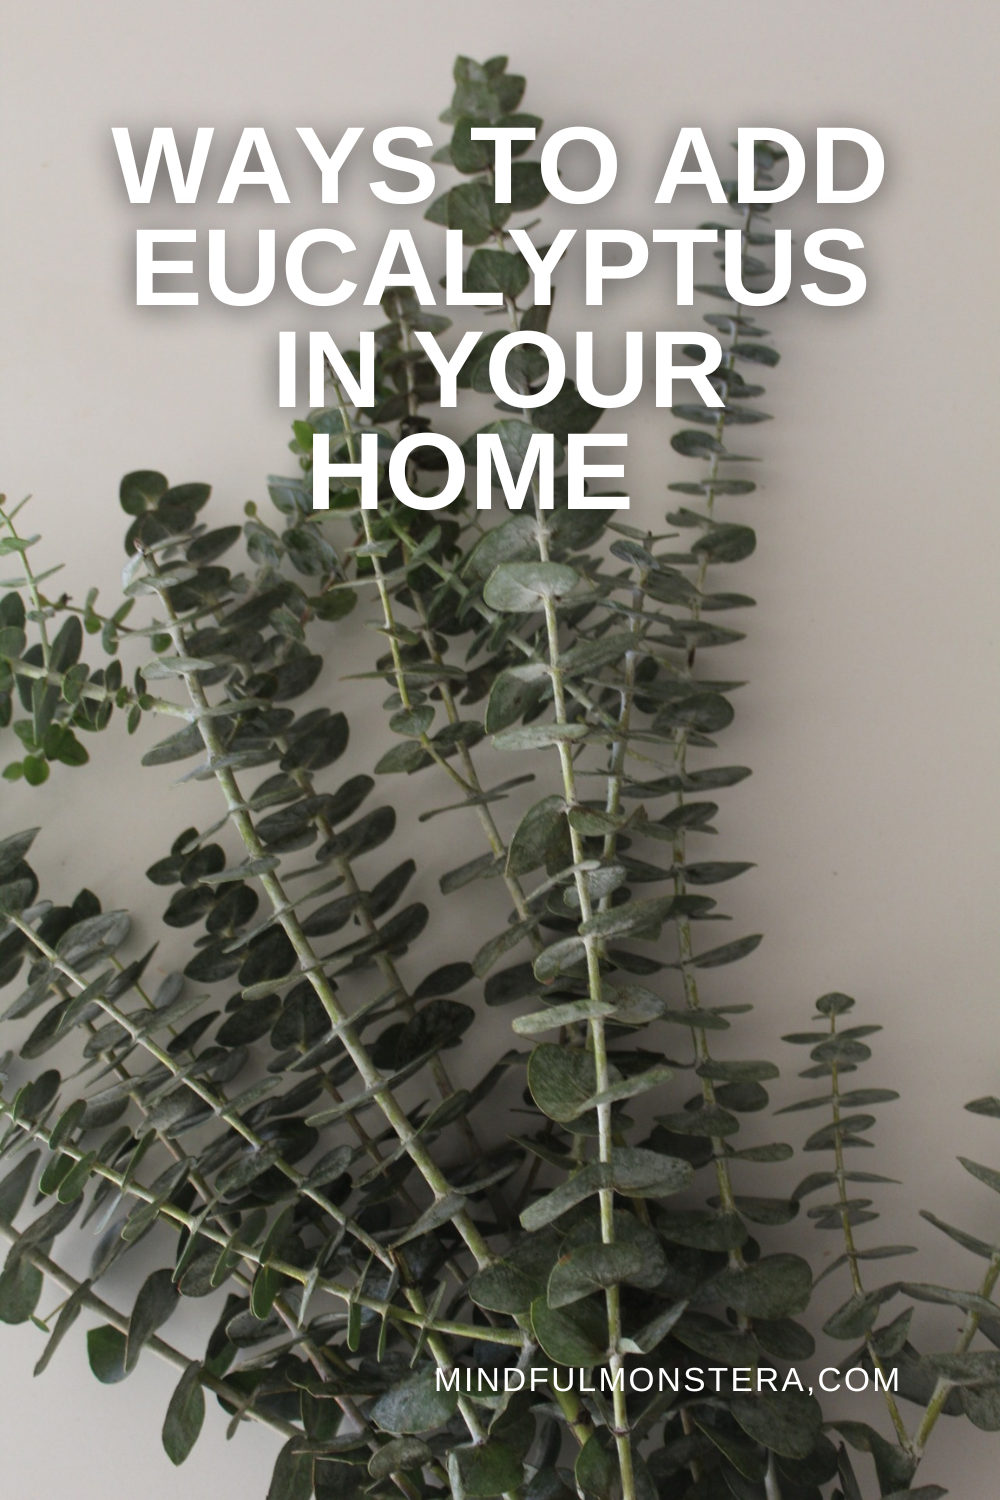 
Eucalyptus
